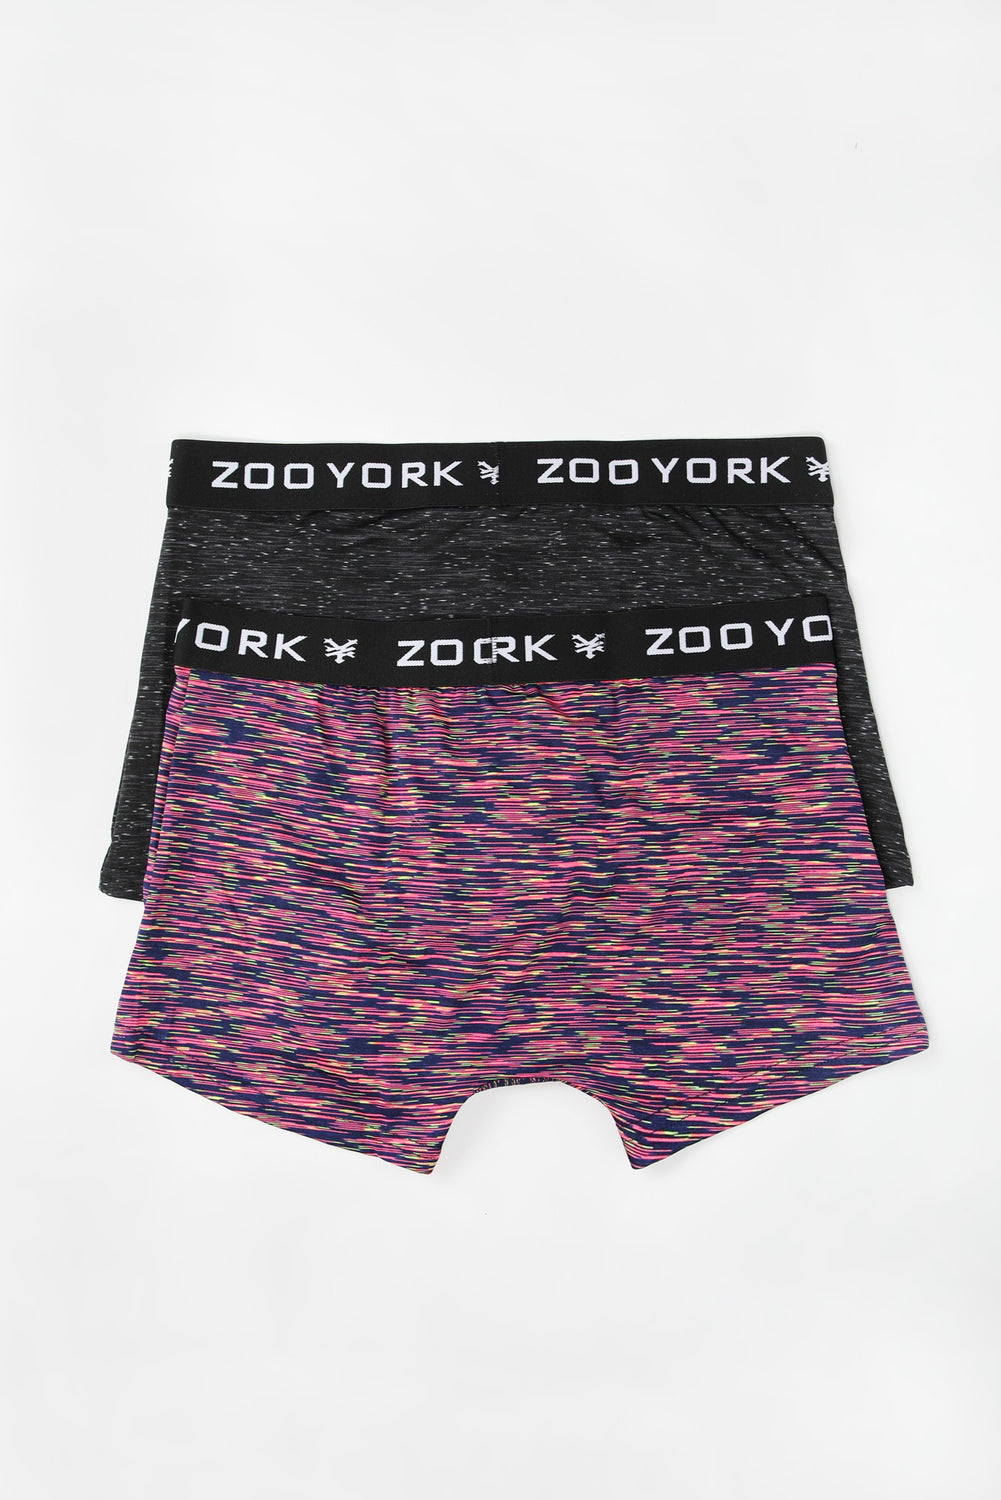 Zoo York Mens 2-Pack Space Dye Boxer Briefs Multi